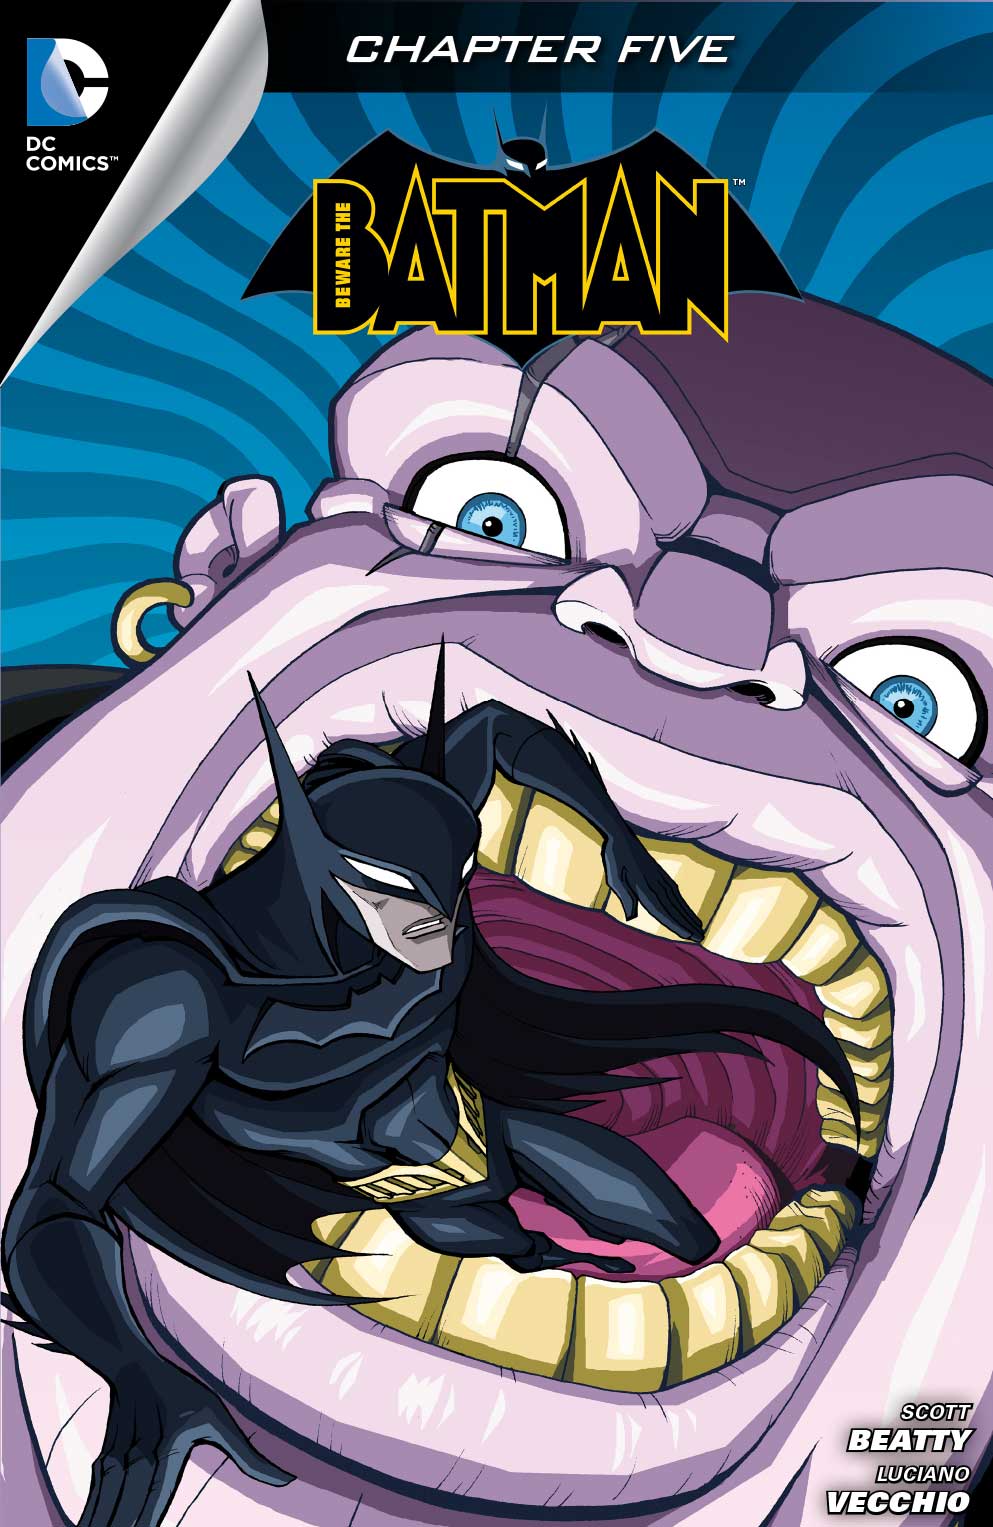 Beware The Batman #5 preview images